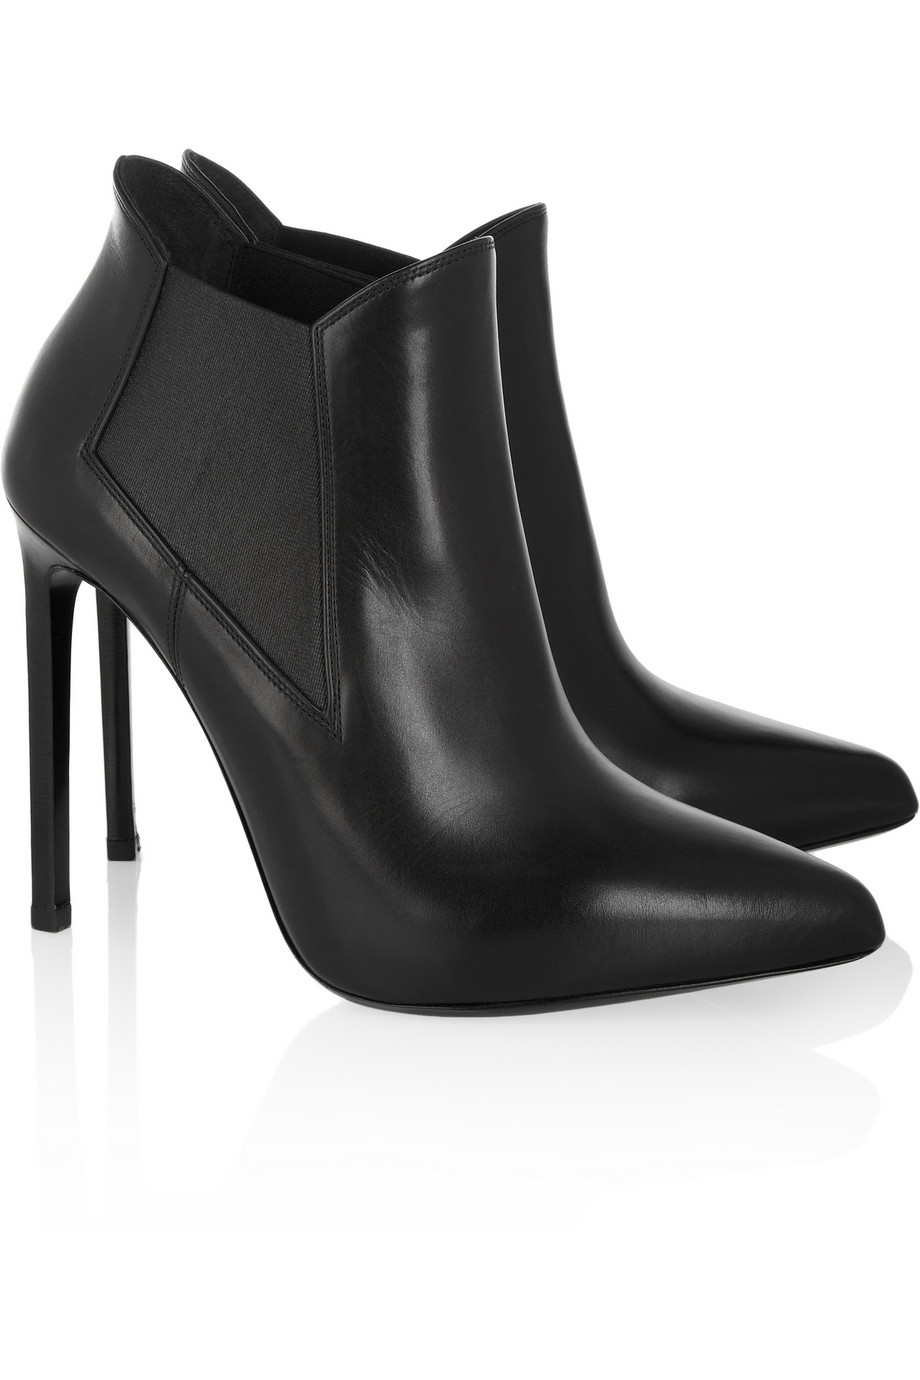 saint-laurent-leather-ankle-boots-pic127136